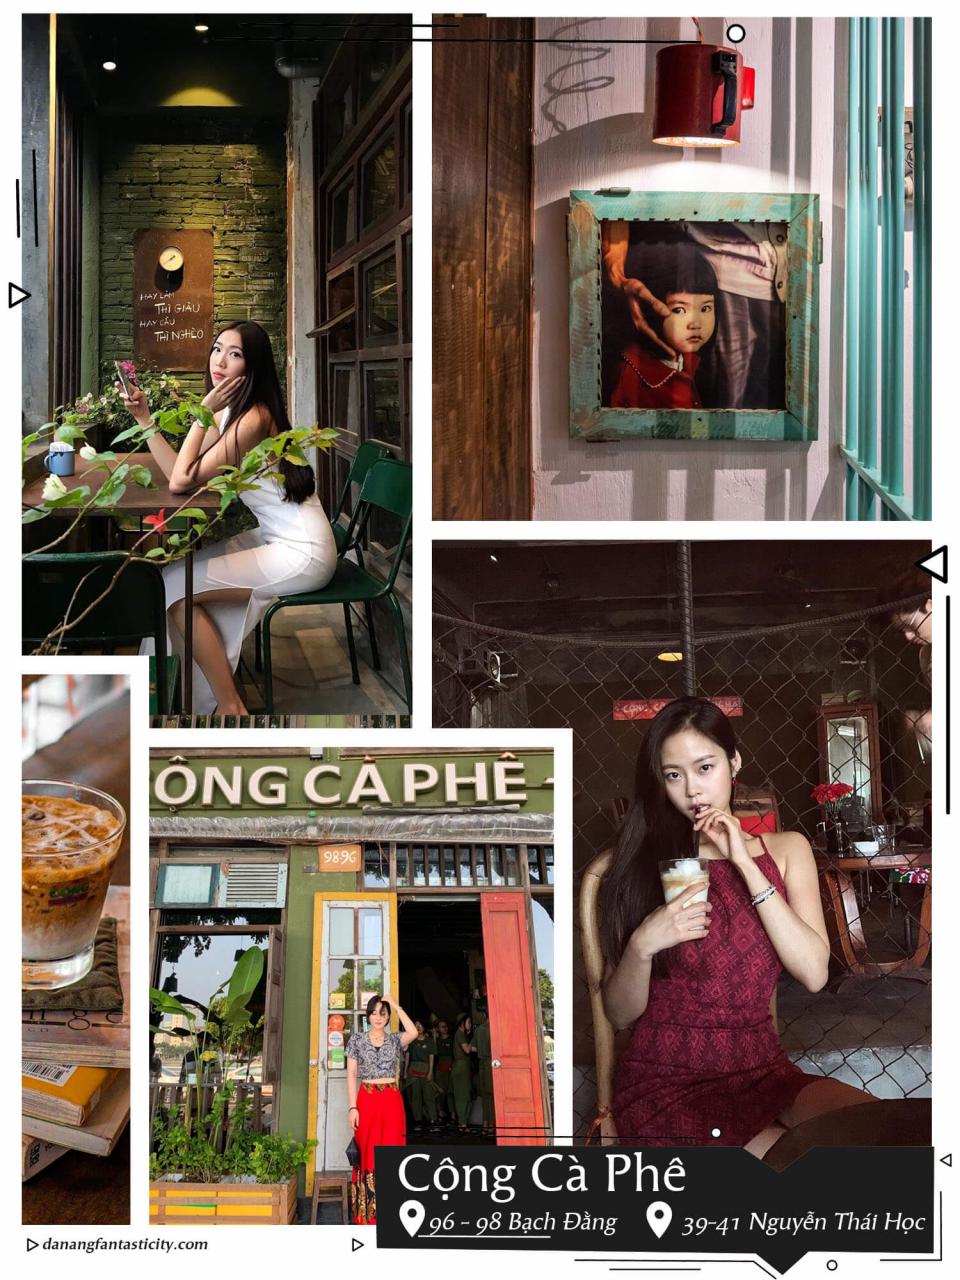 Cong Ca Phe 36 38 Bach Dang 39 41 Nguyen Thai Hoc Nhung Tiem Cafe Nhat Dinh Phai Ghe Tai Da Nang Fantasticity Com 01